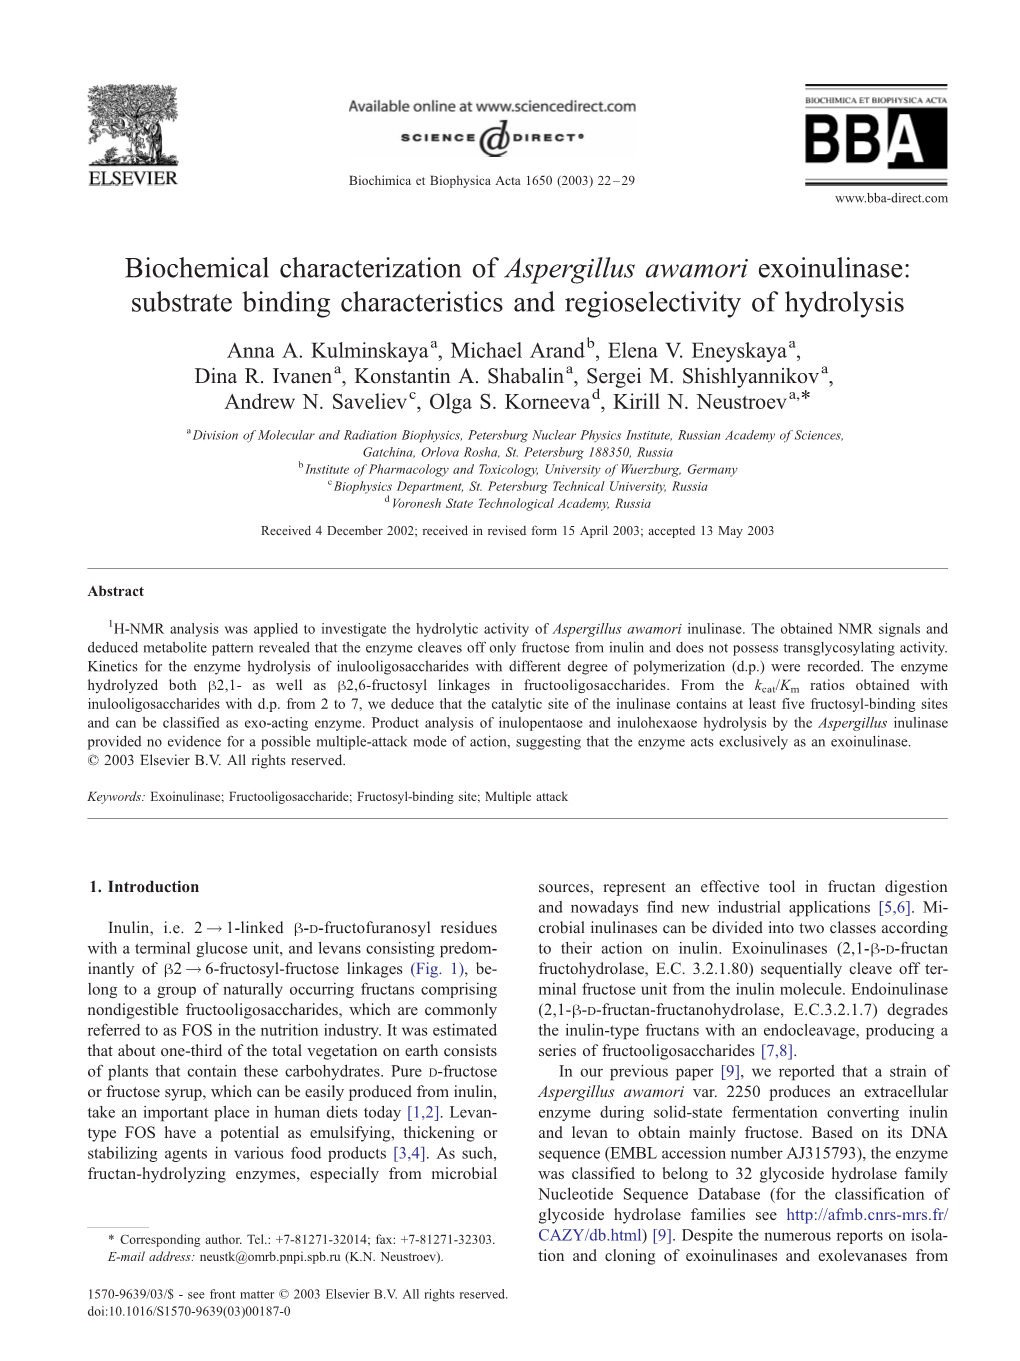 Biochemical Characterization of Aspergillus Awamori Exoinulinase: Substrate Binding Characteristics and Regioselectivity of Hydrolysis